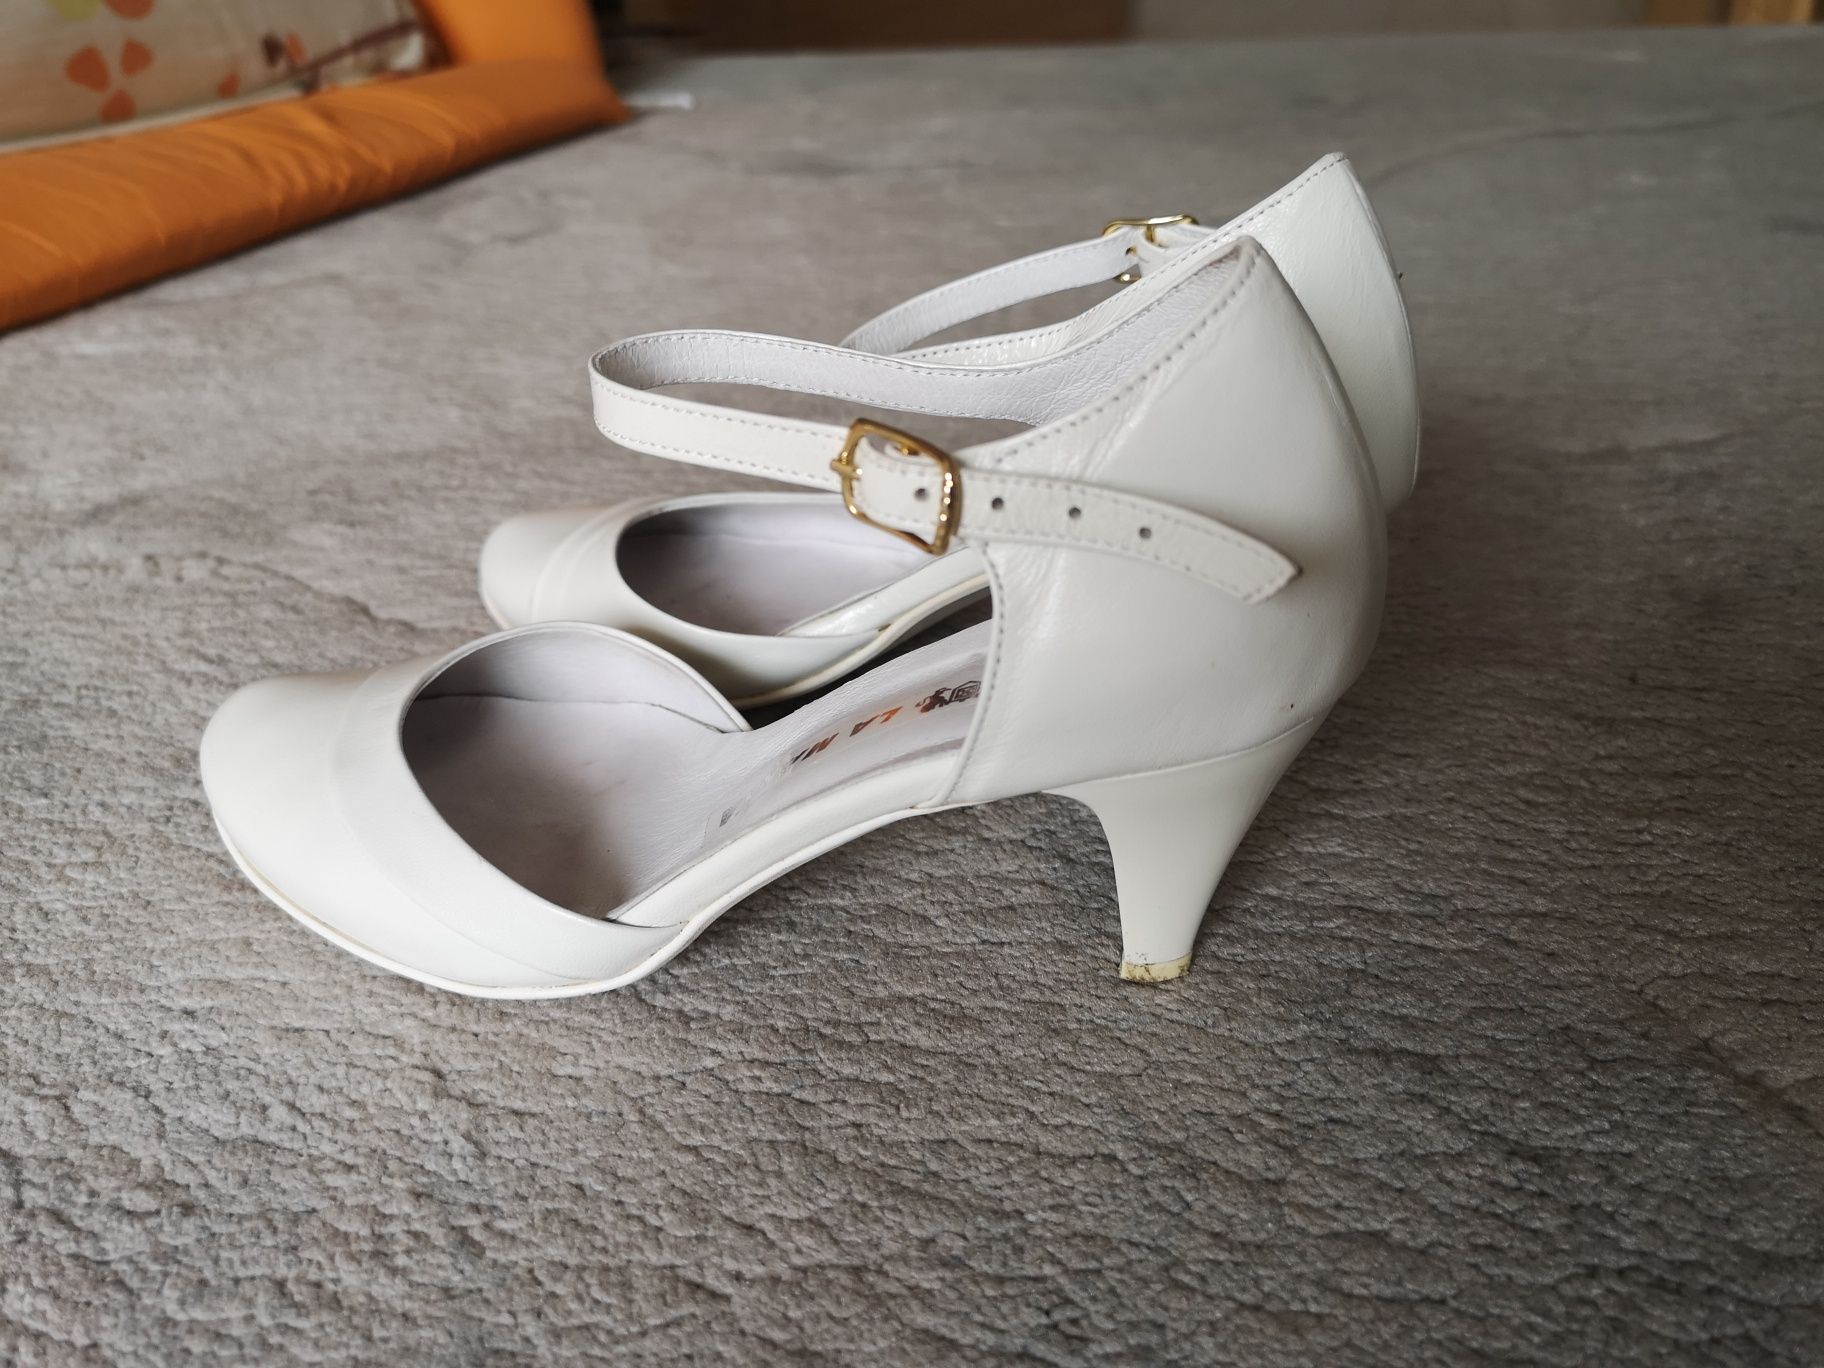 Buty ślubne białe ecrue